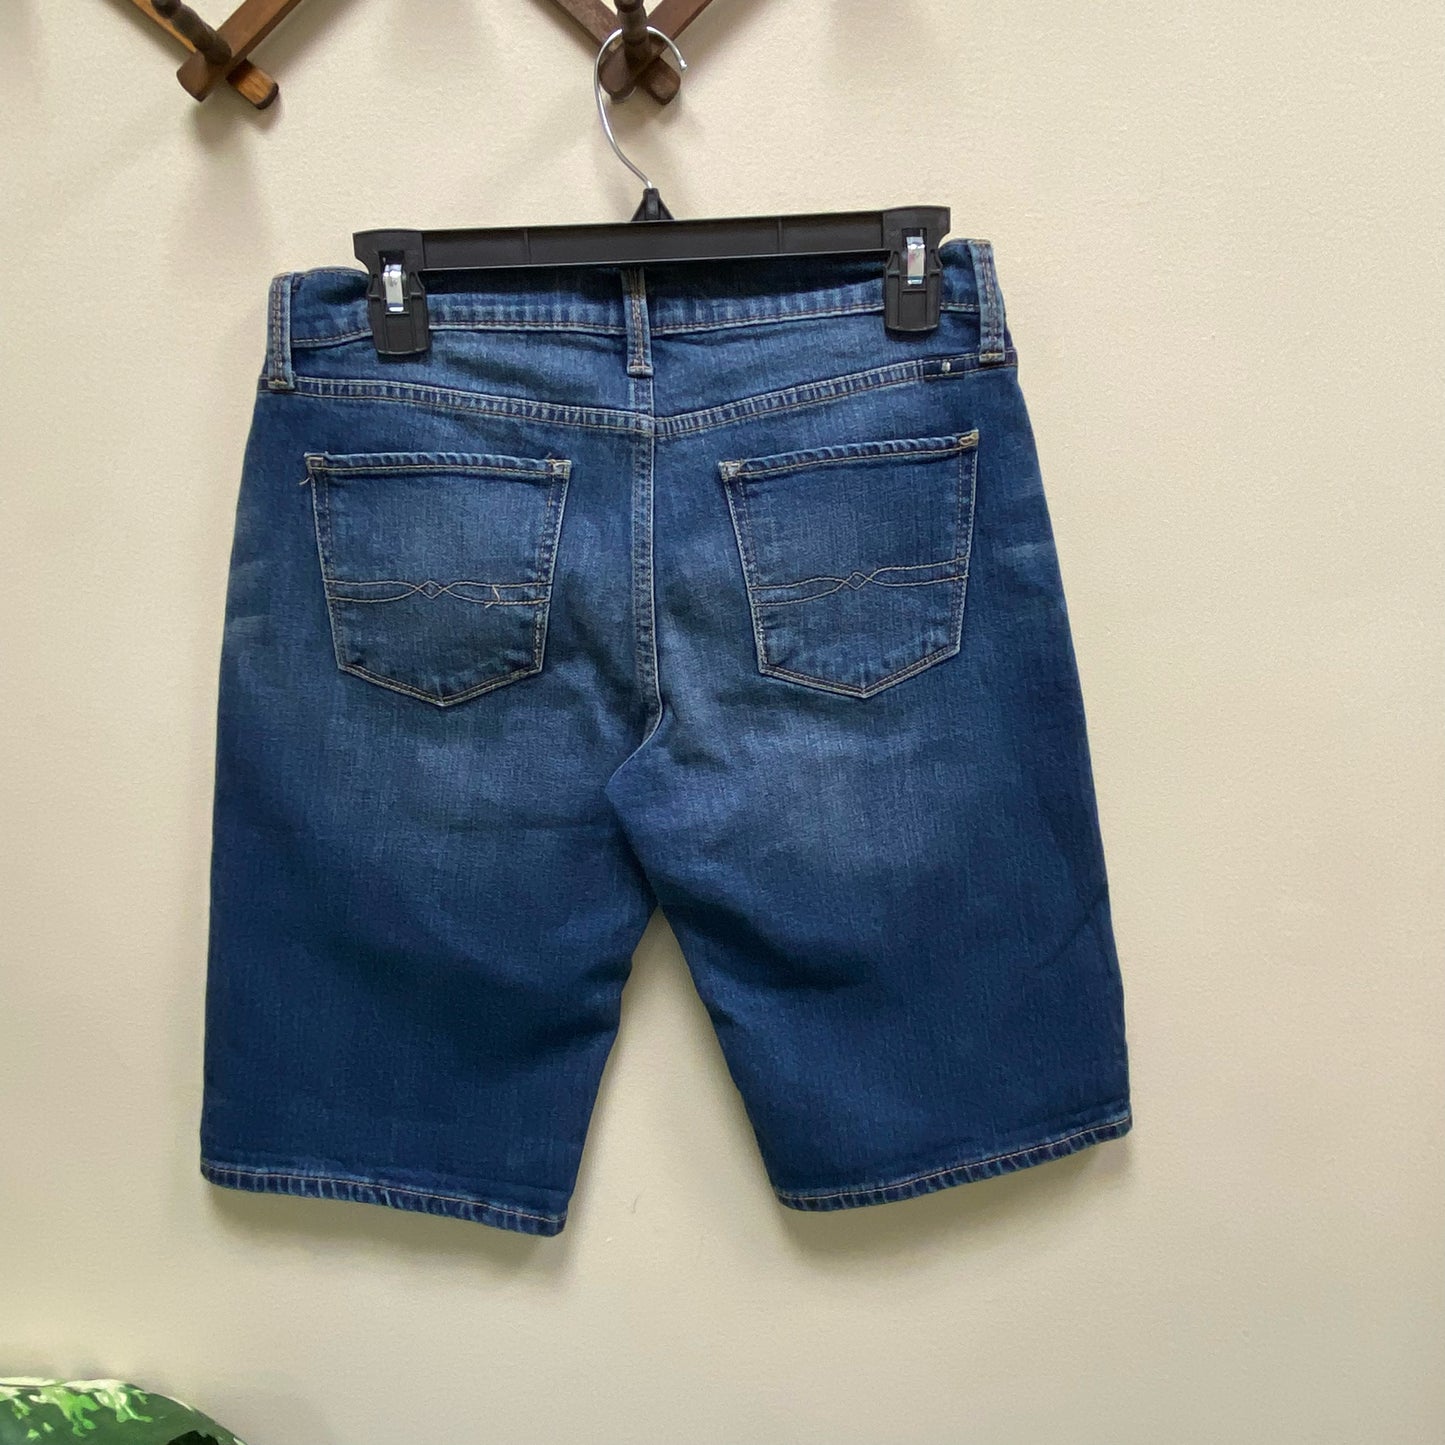 Lucky Brand Bermuda Medium Wash Denim Jean Shorts - Size 2/26